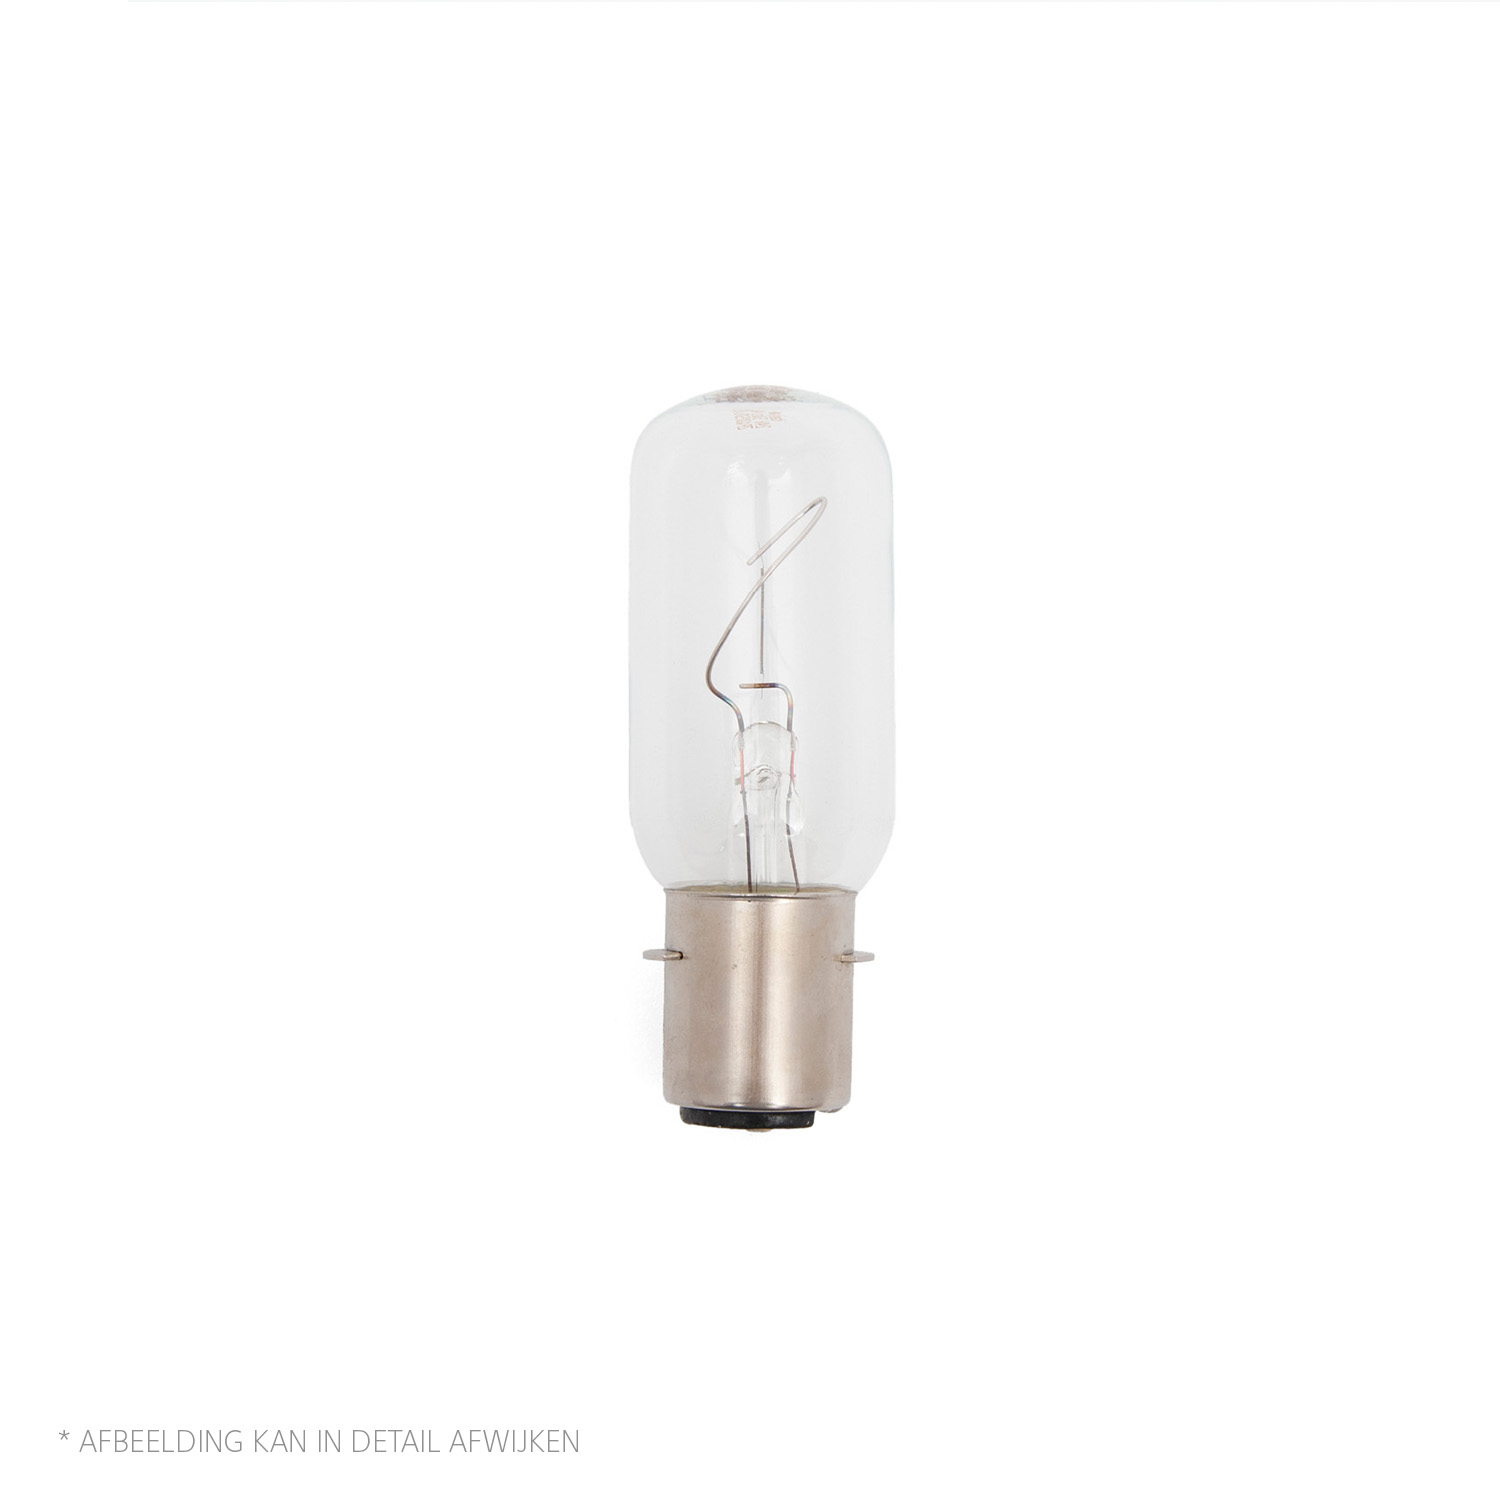 LAMP230V-65W Incandescent lamp 230V-65W P28s 500262